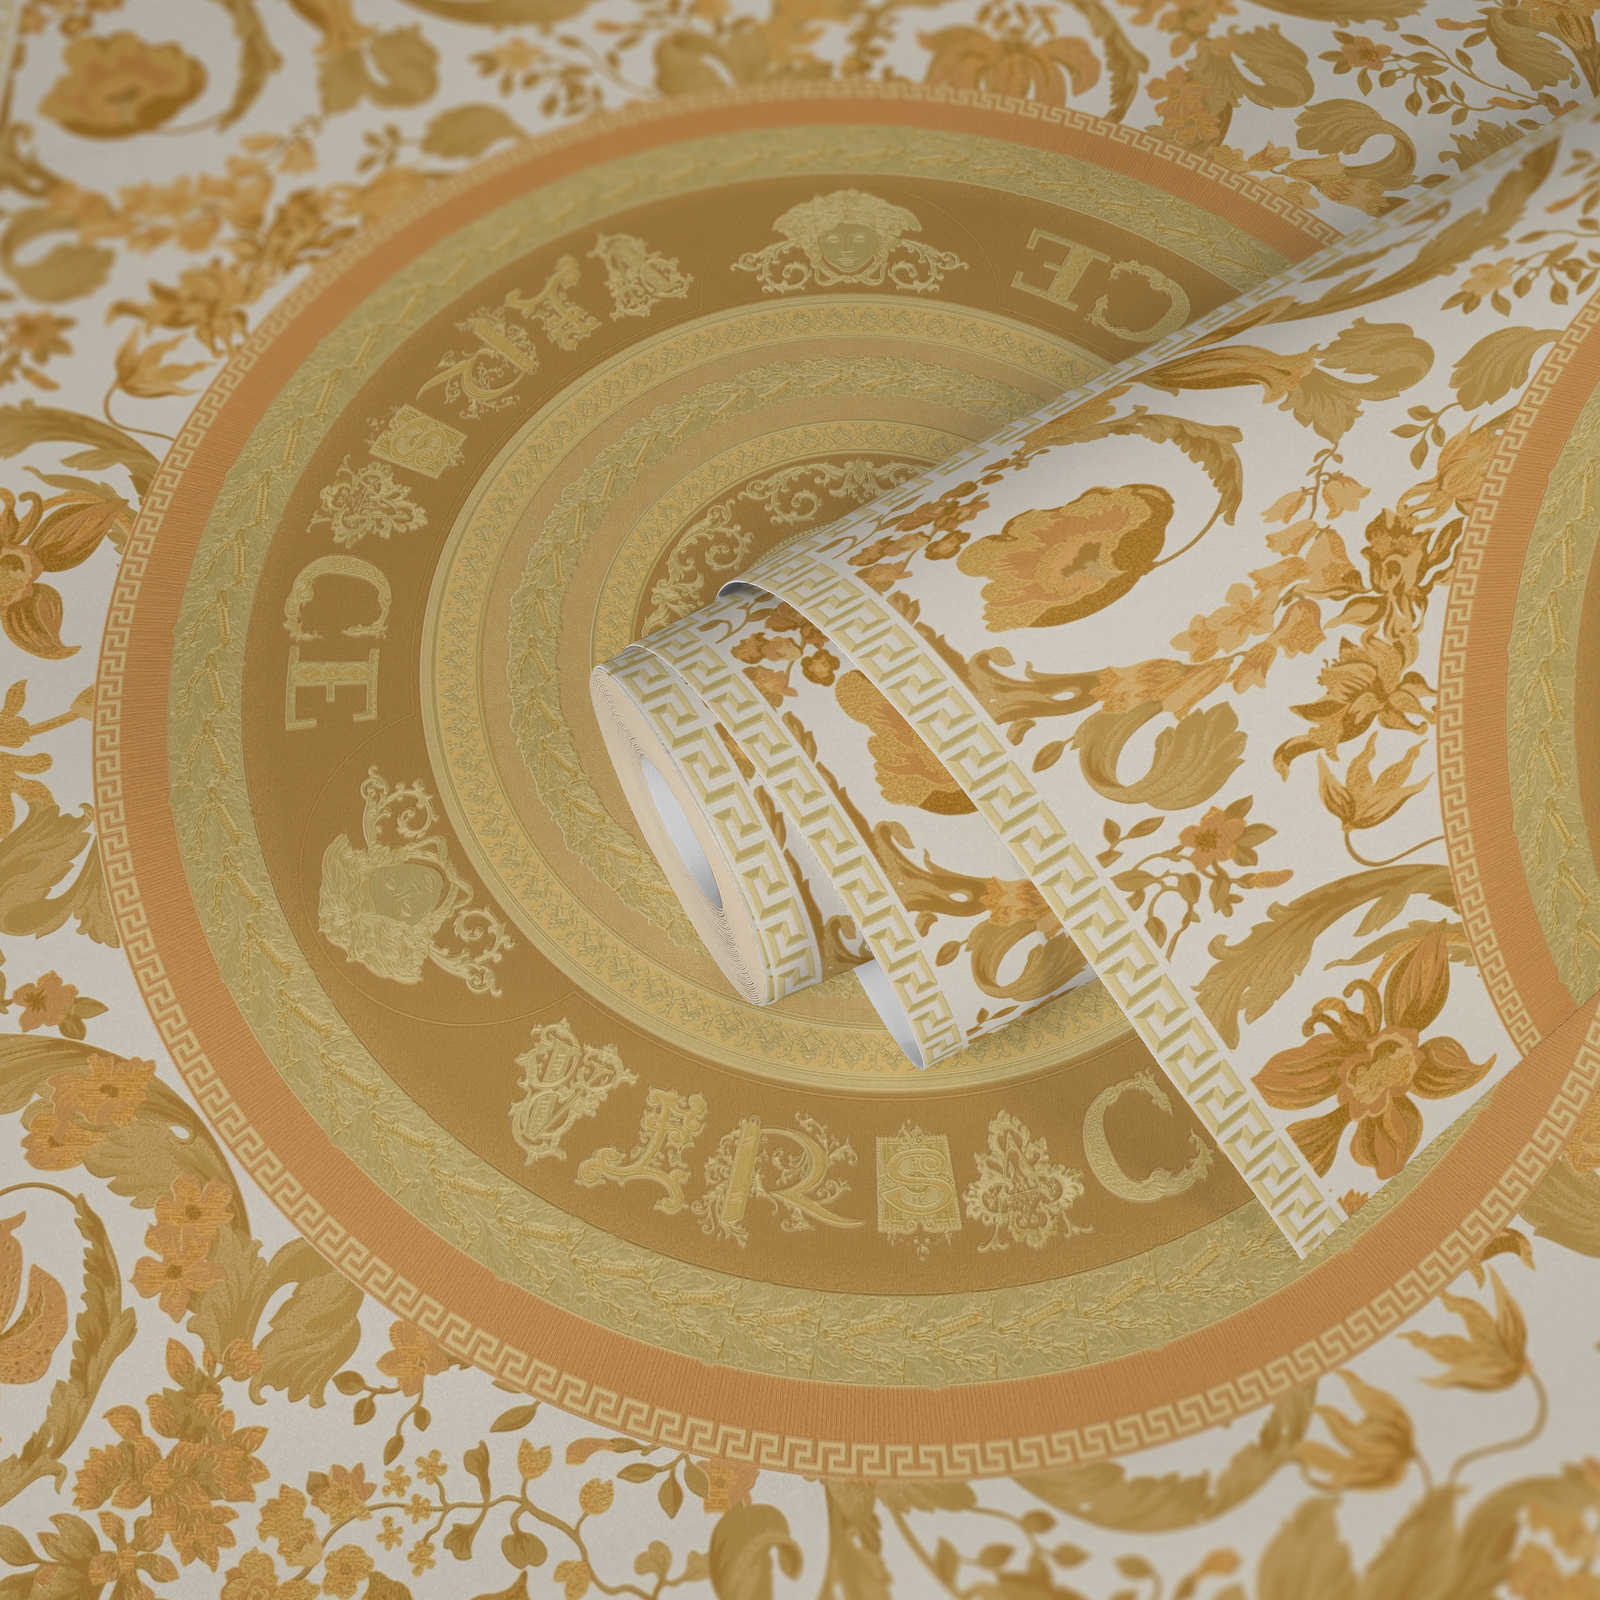             Goldene VERSACE Tapete mit rundem Emblem – Creme
        